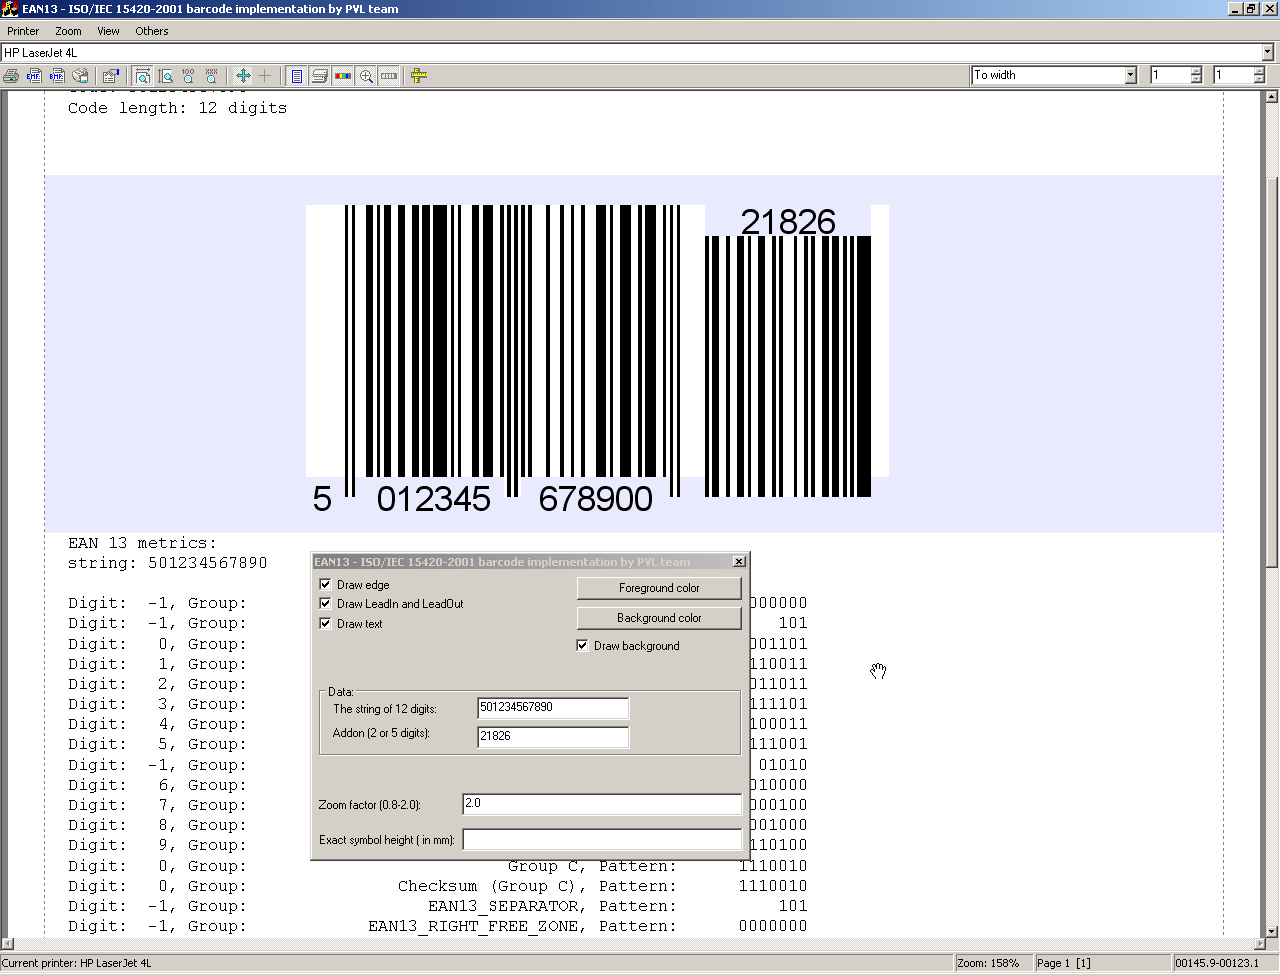 EAN13 barcode source code 1.0.0.0